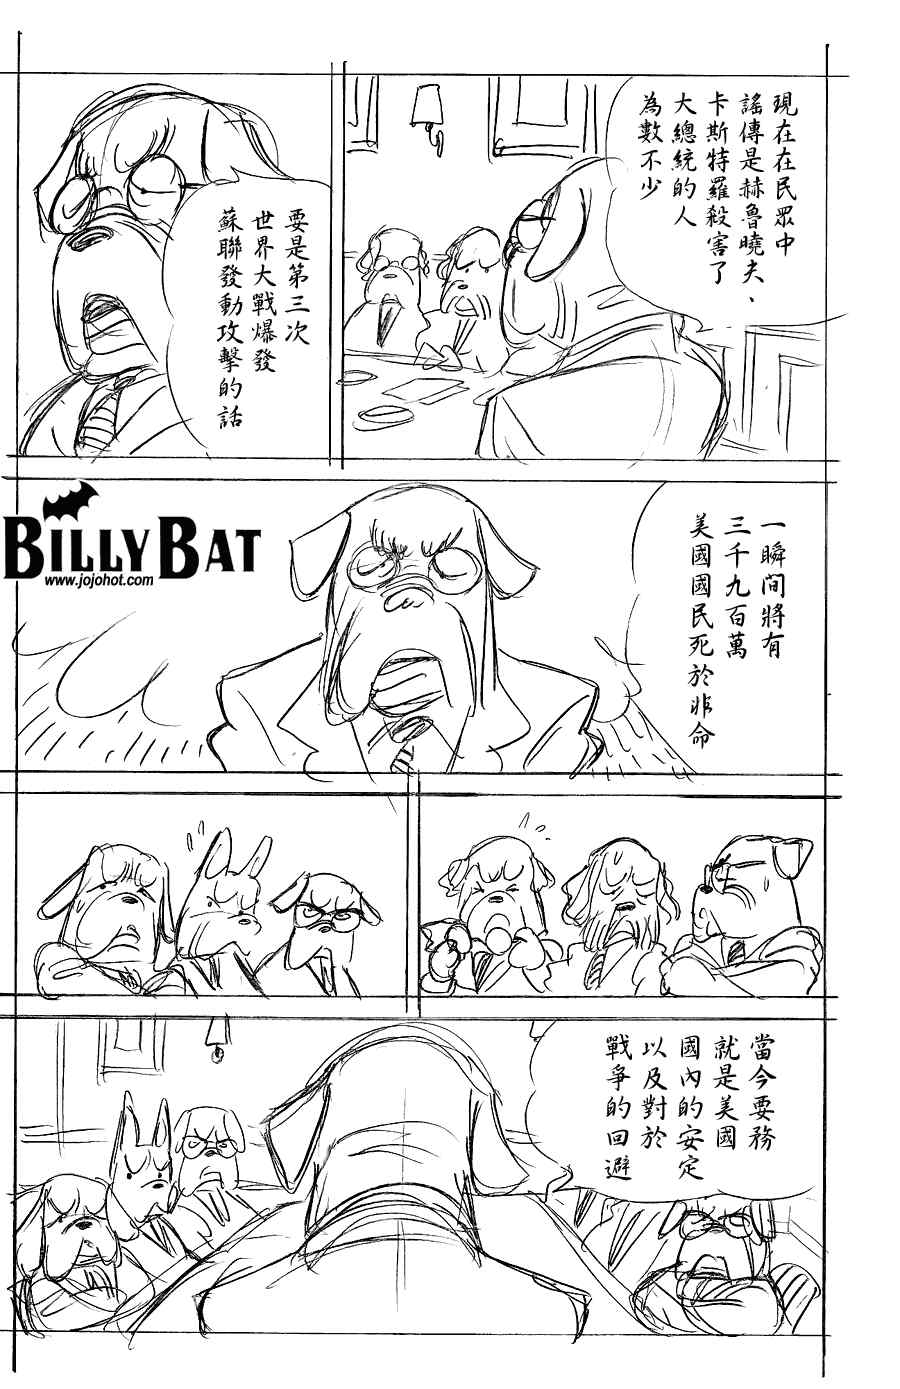 Billy_Bat - 第56話 - 5